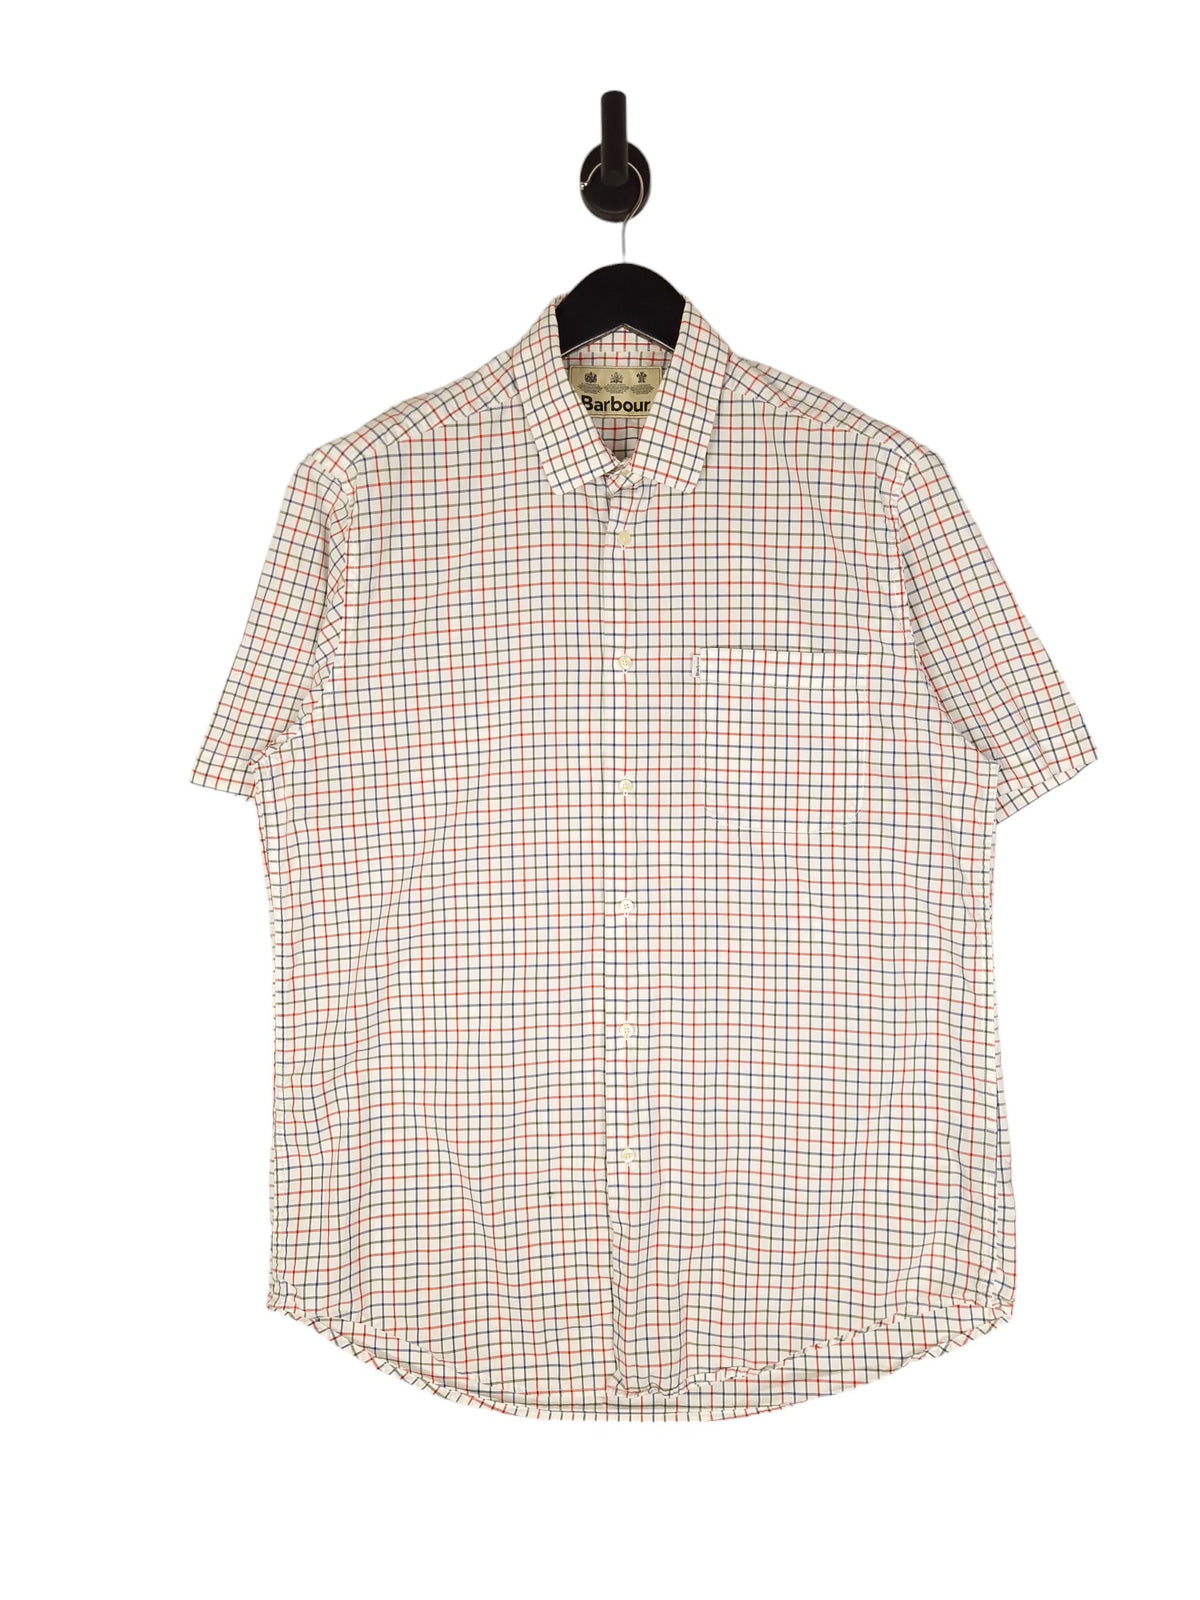 Barbour Lidcutt Check Shirt - Size Large